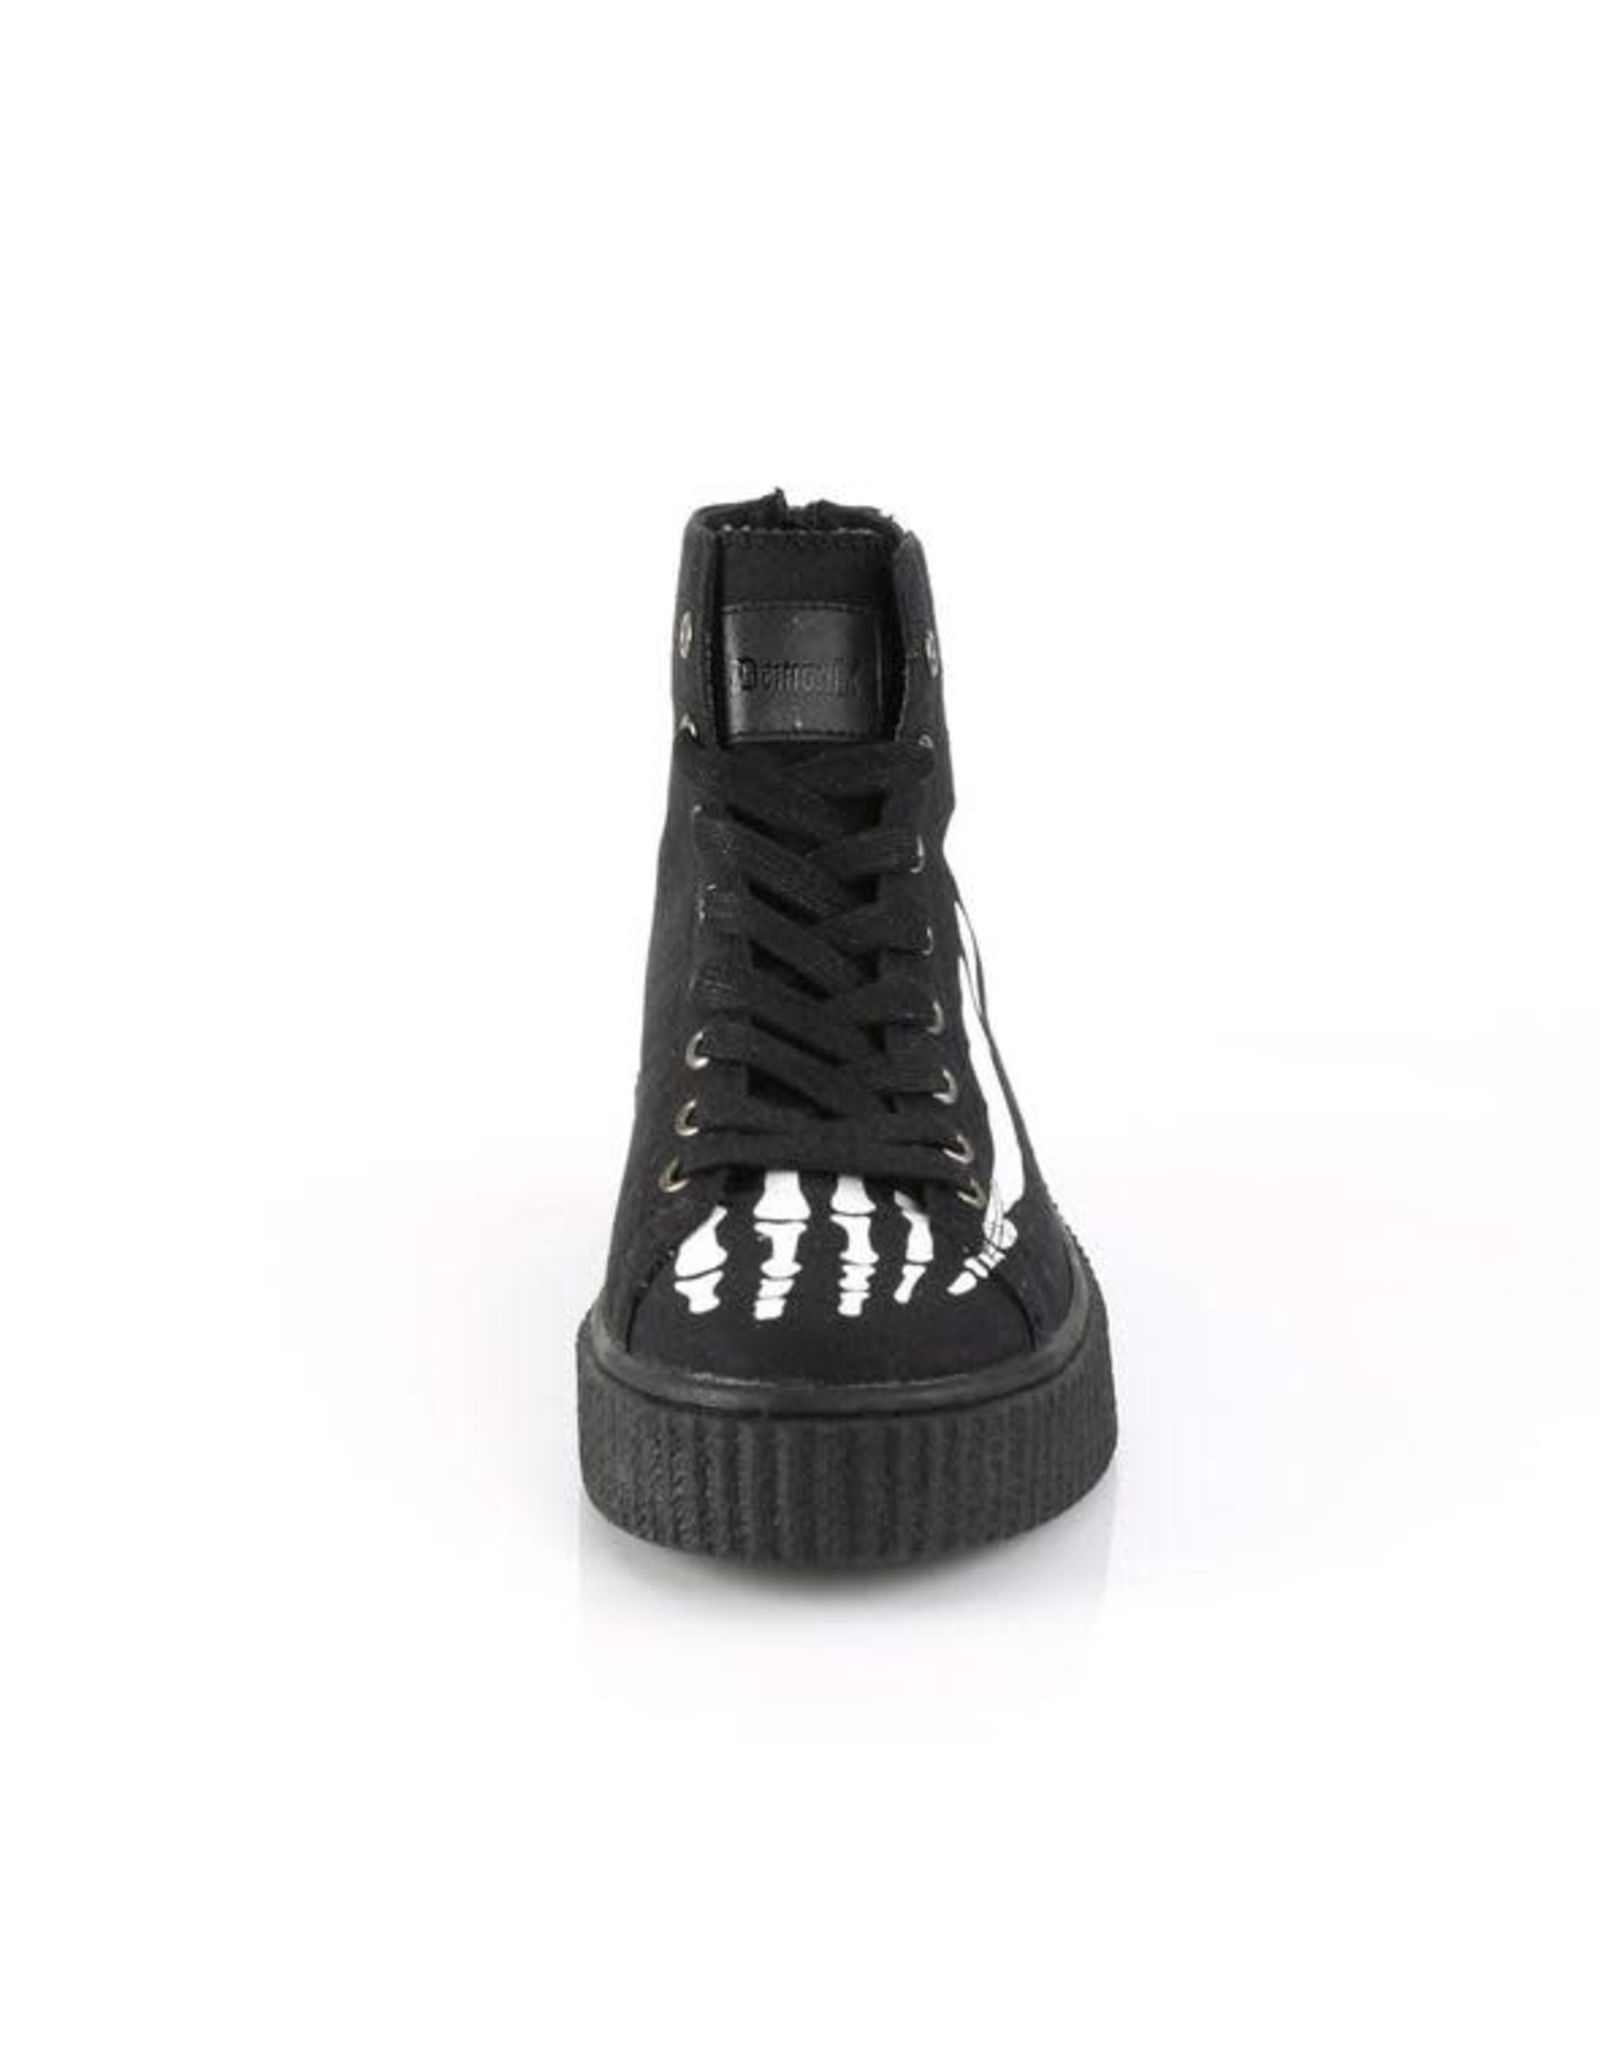 SNEEKER-252 1 1/2" Platform High Top Round Toe Lace-Up Front Creeper Sneaker Xray Bone Print, Back Metal Zipper D15BP - SNK252/BCA